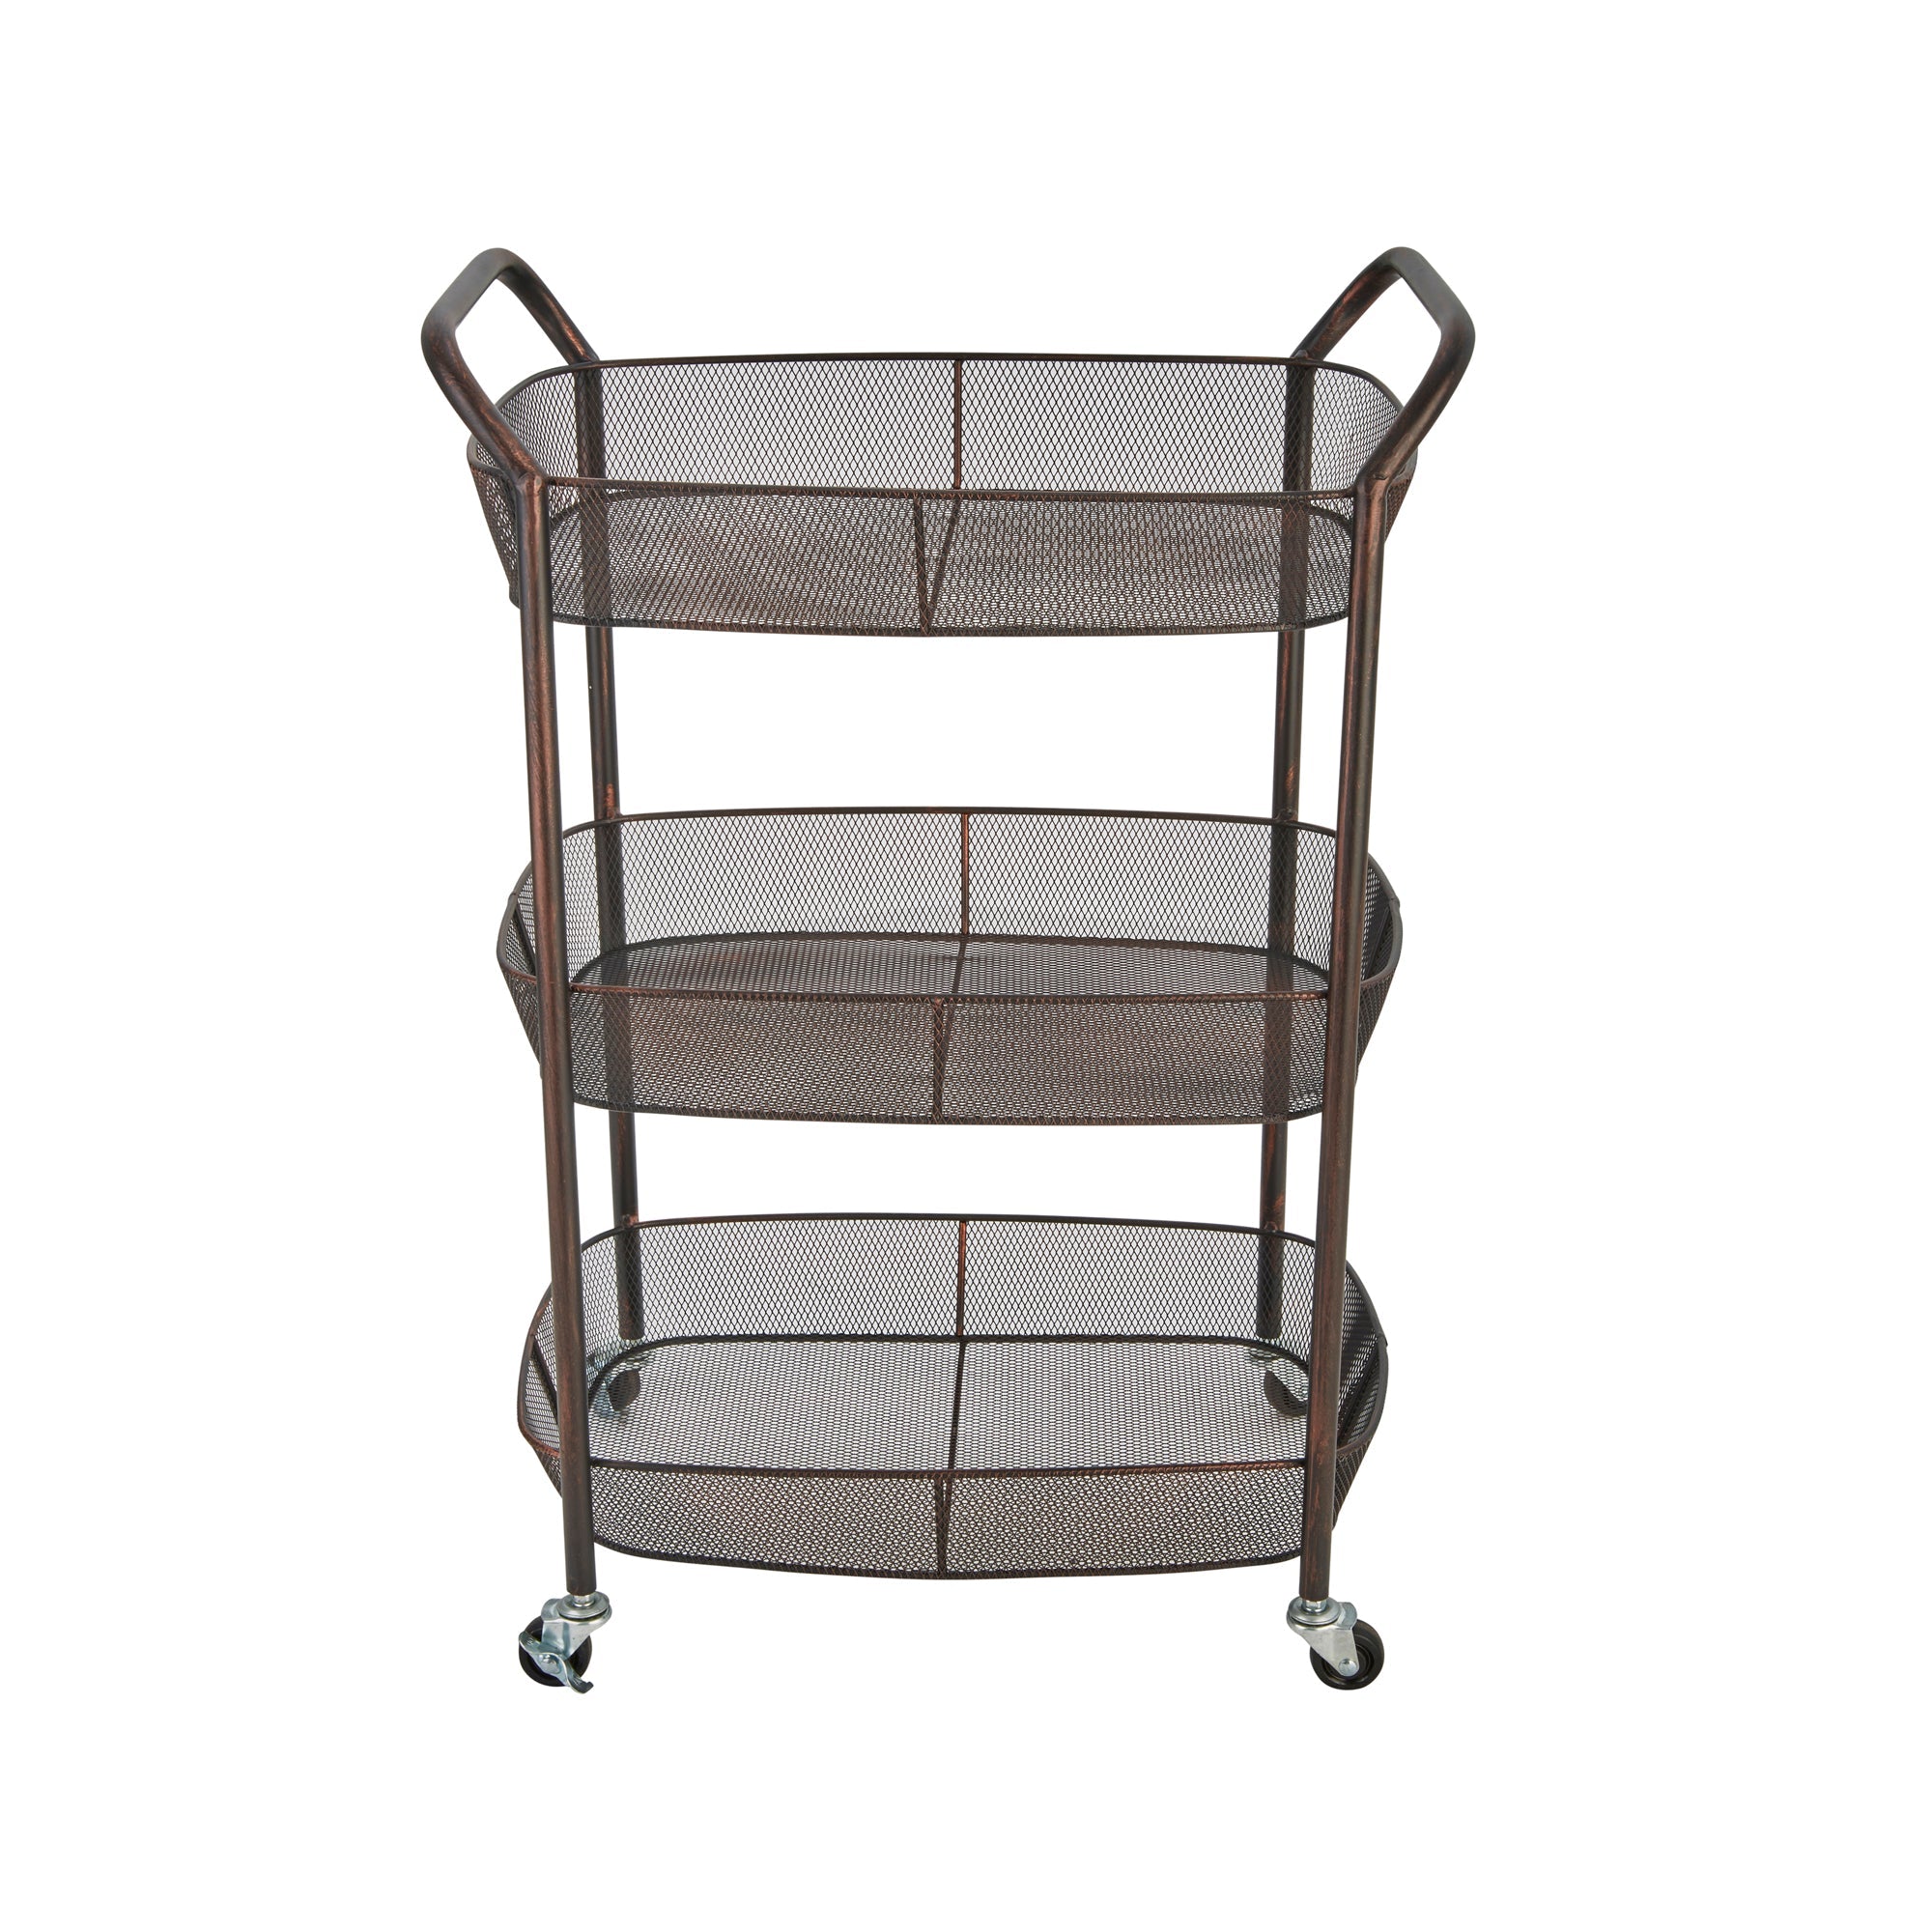 Sabebrook Home EC, 3-tier Metal Basket Bar Cart - The Bar Design